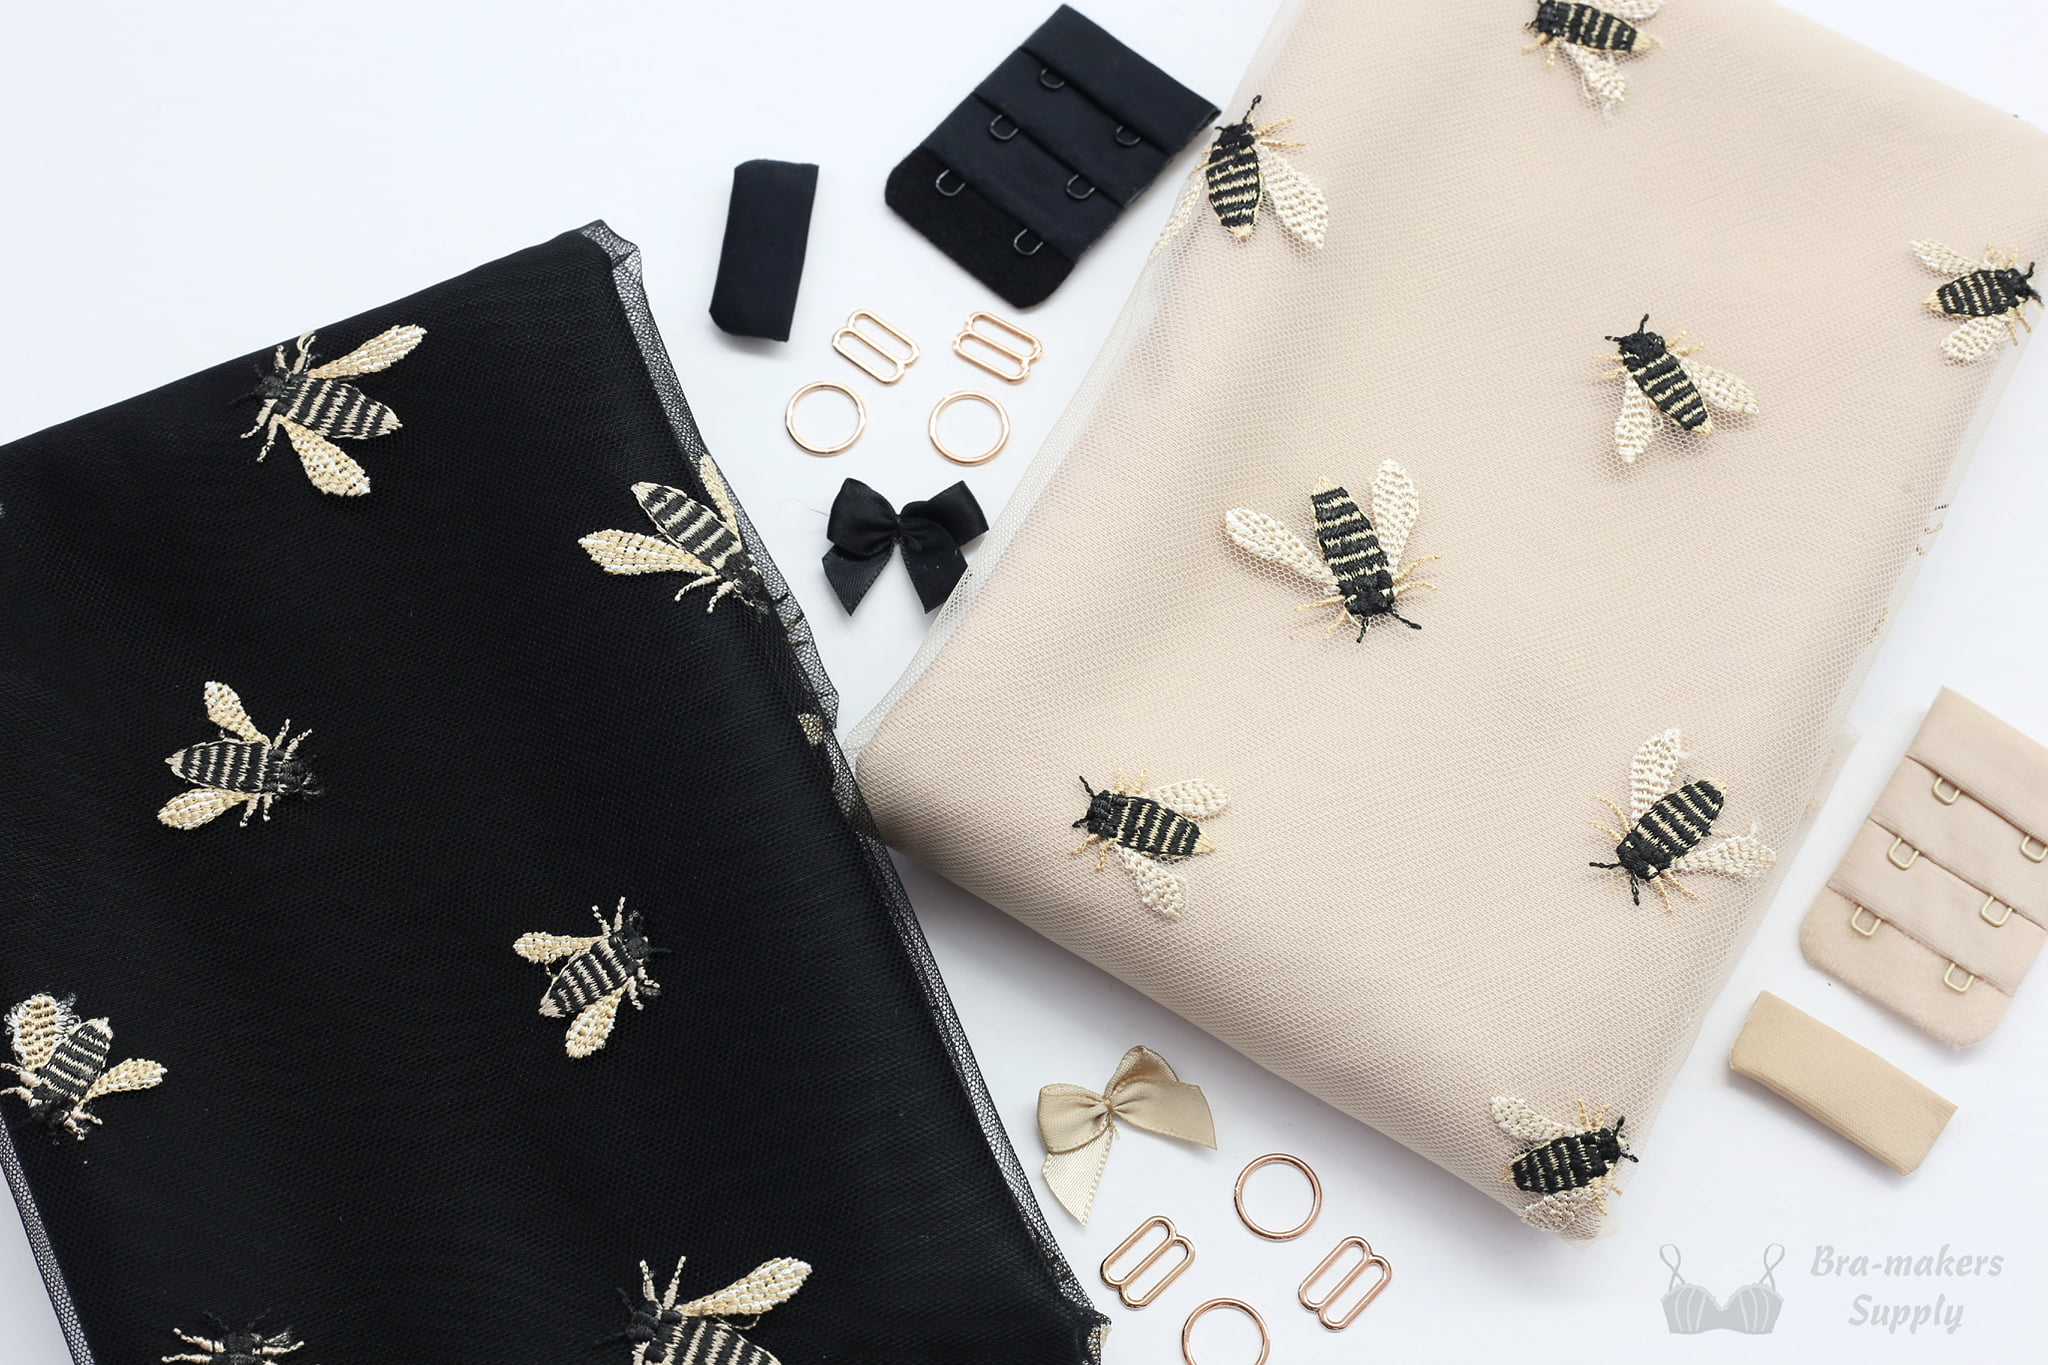 Bumble Boo-Bees Bra Kit - make your own custom bra - Bra-Makers Supply